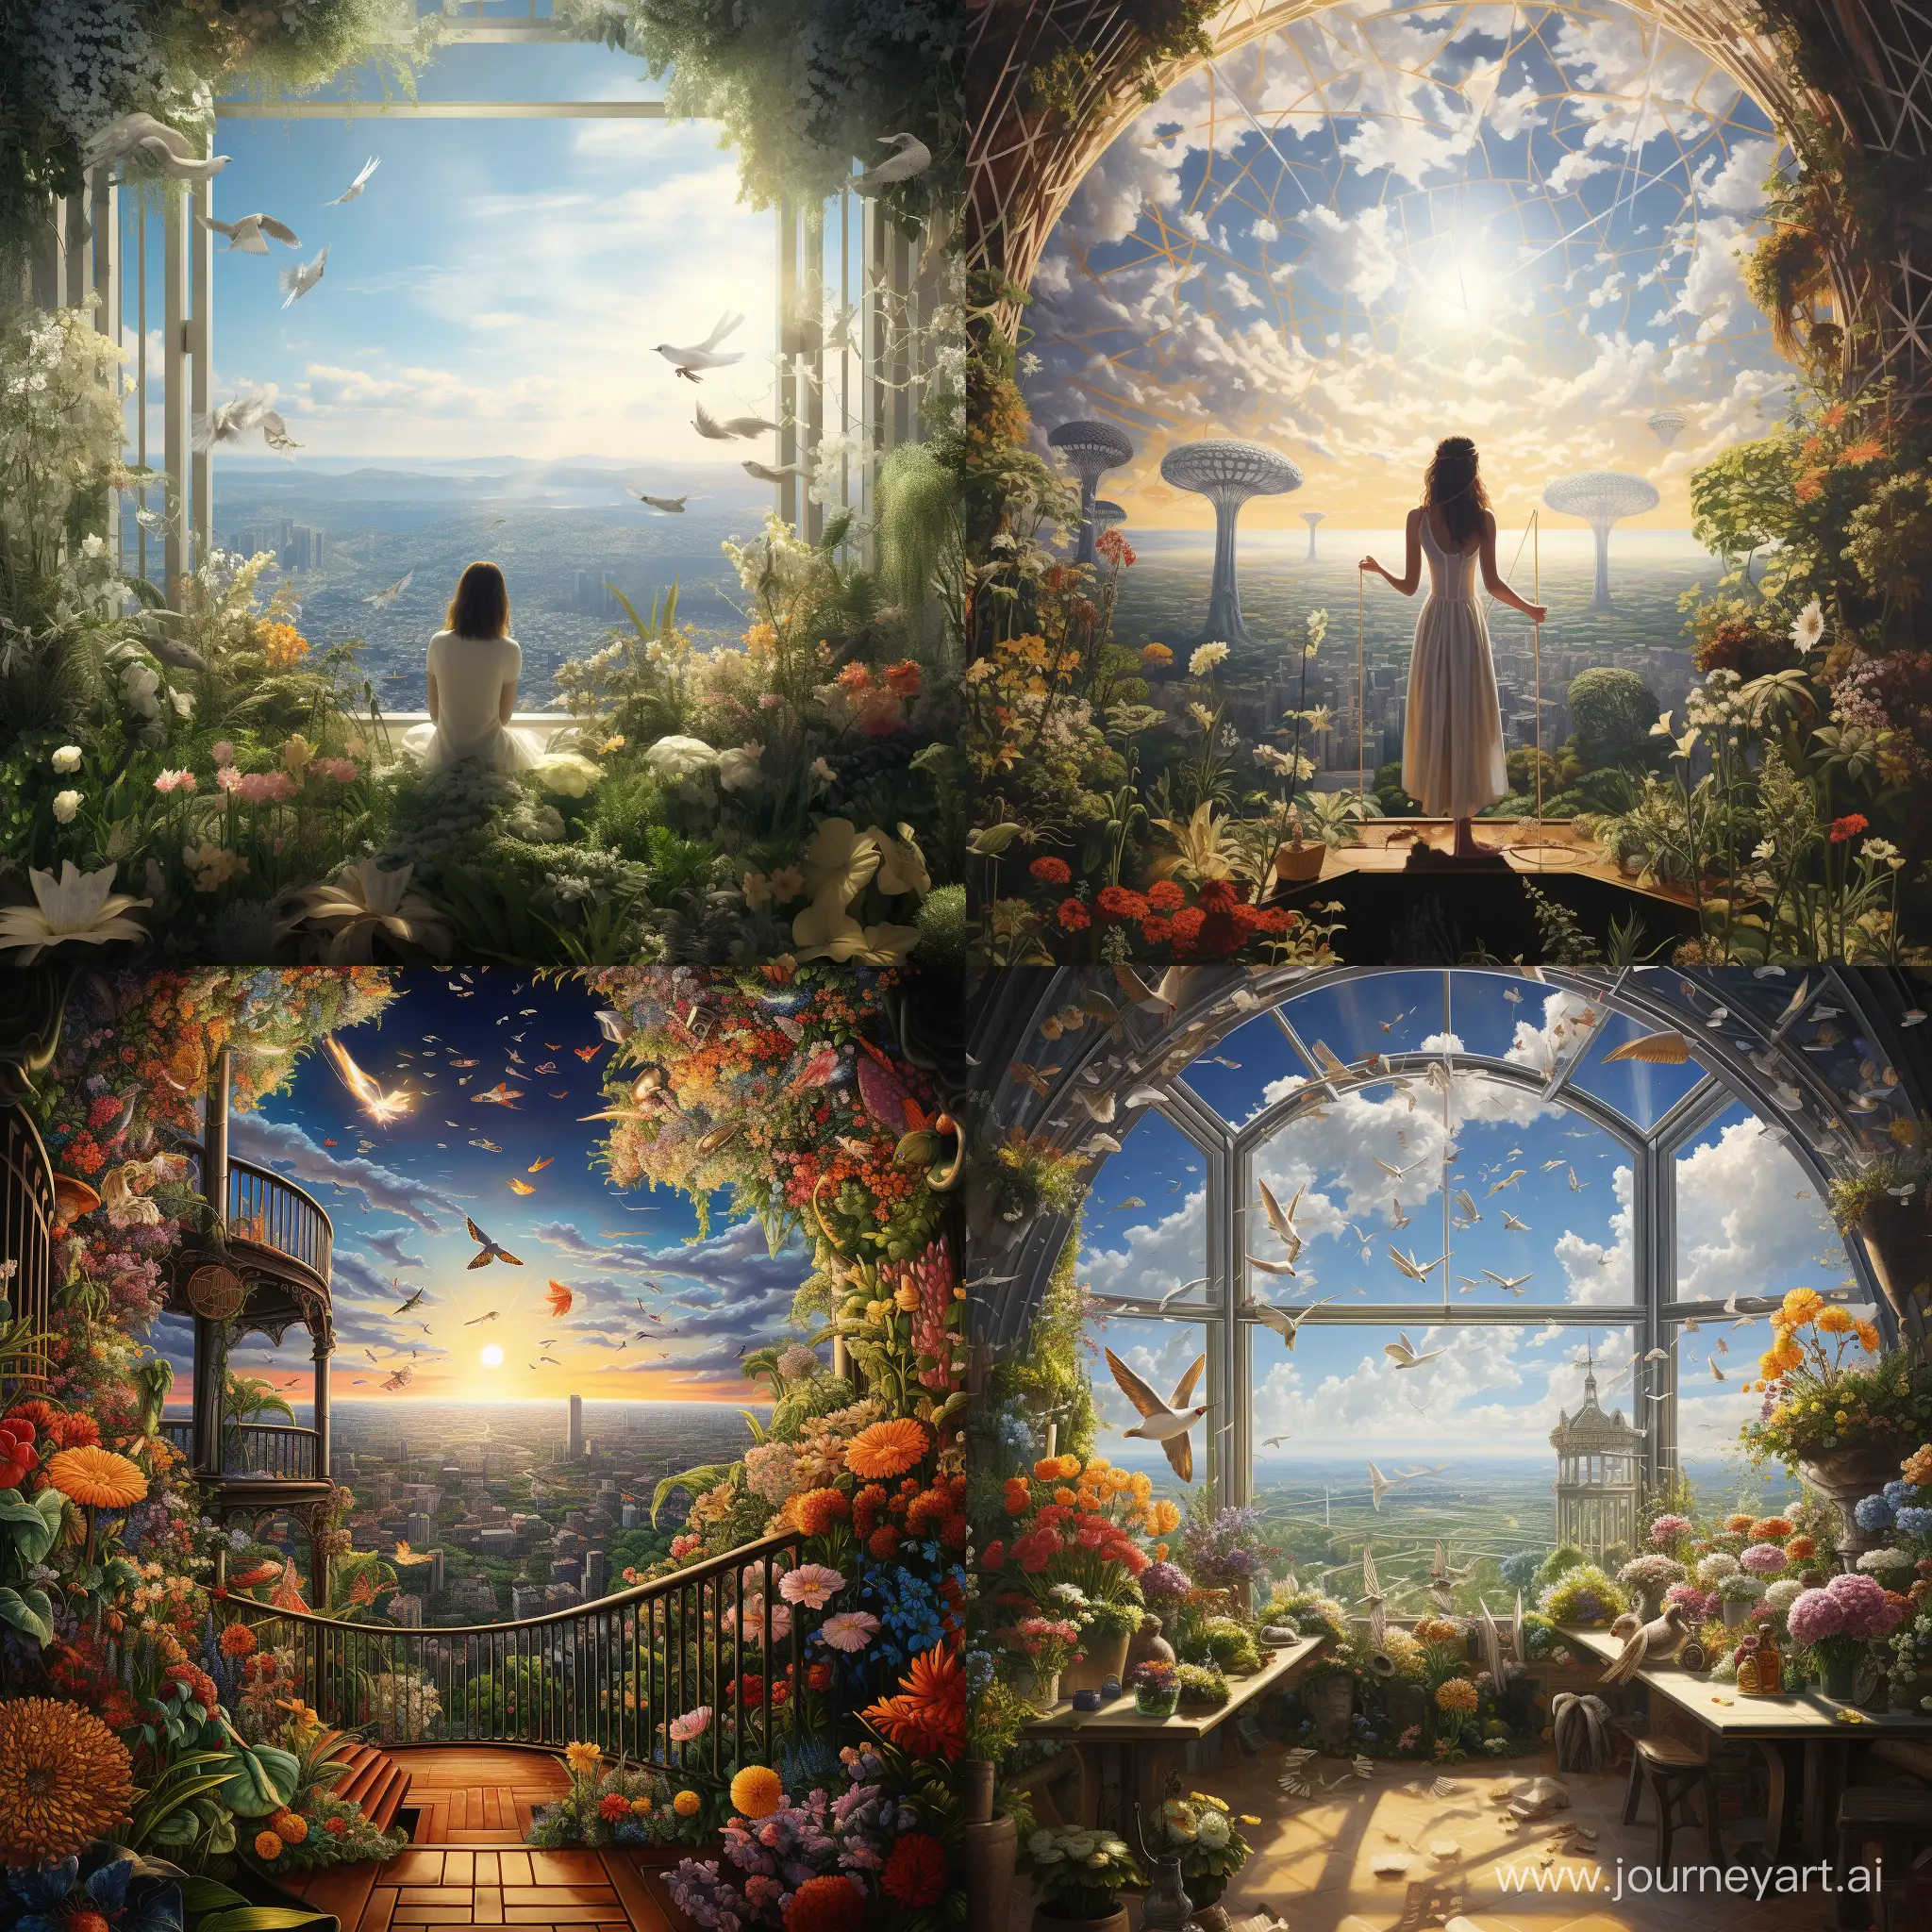 Vibrant-Sky-Garden-Oasis-A-Captivating-11-Aspect-Ratio-Composition